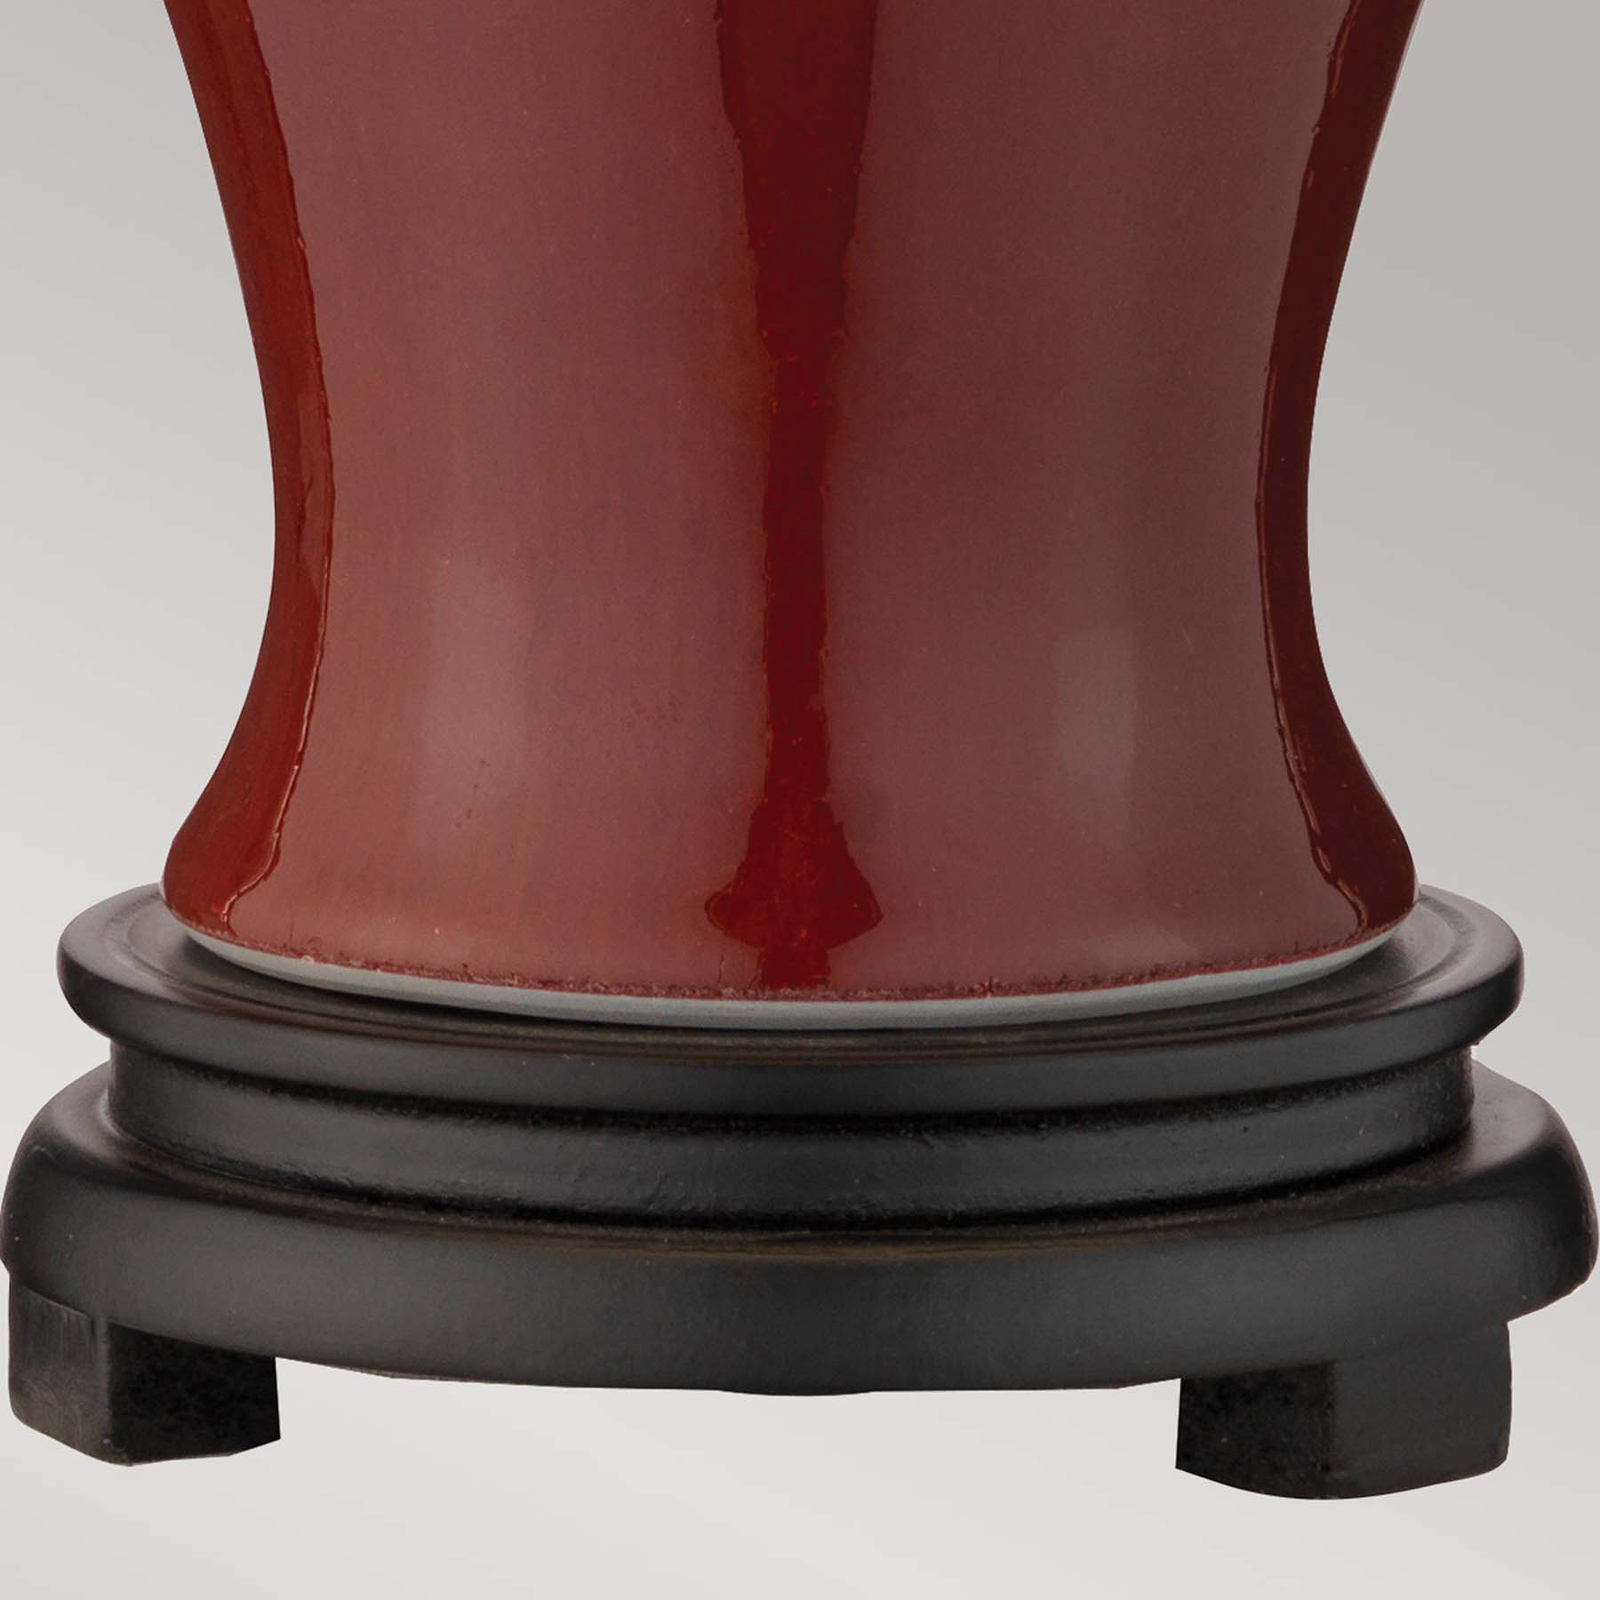 Tischleuchte Majin Small mit rotem Keramikfuß